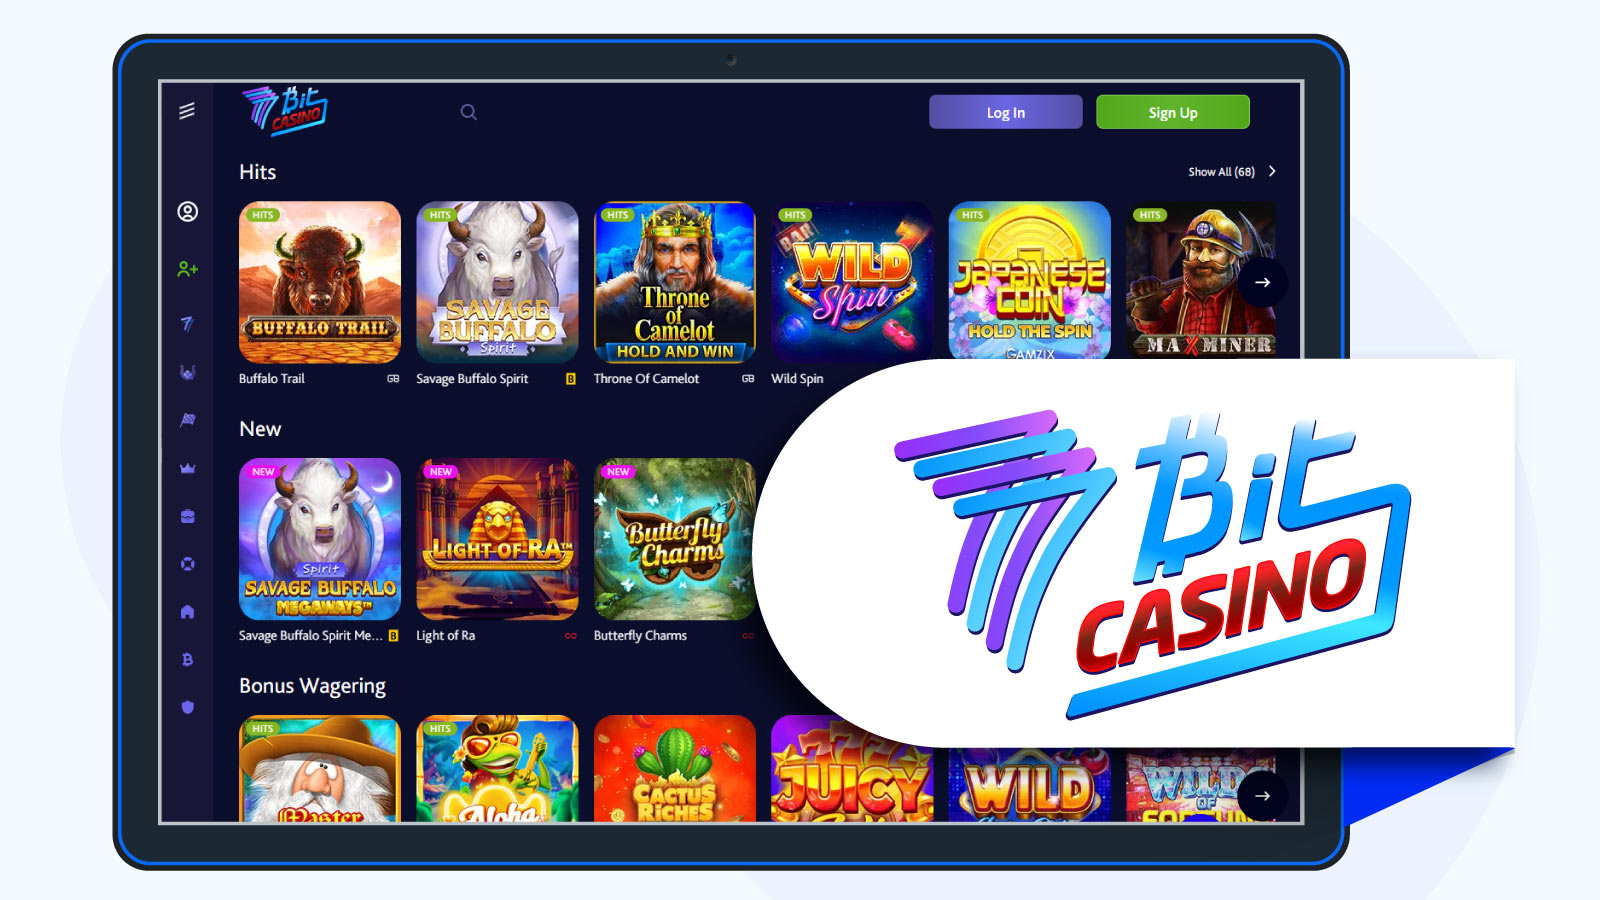 7Bit Casino Best NetEnt Platform for Deposits and Withdrawals